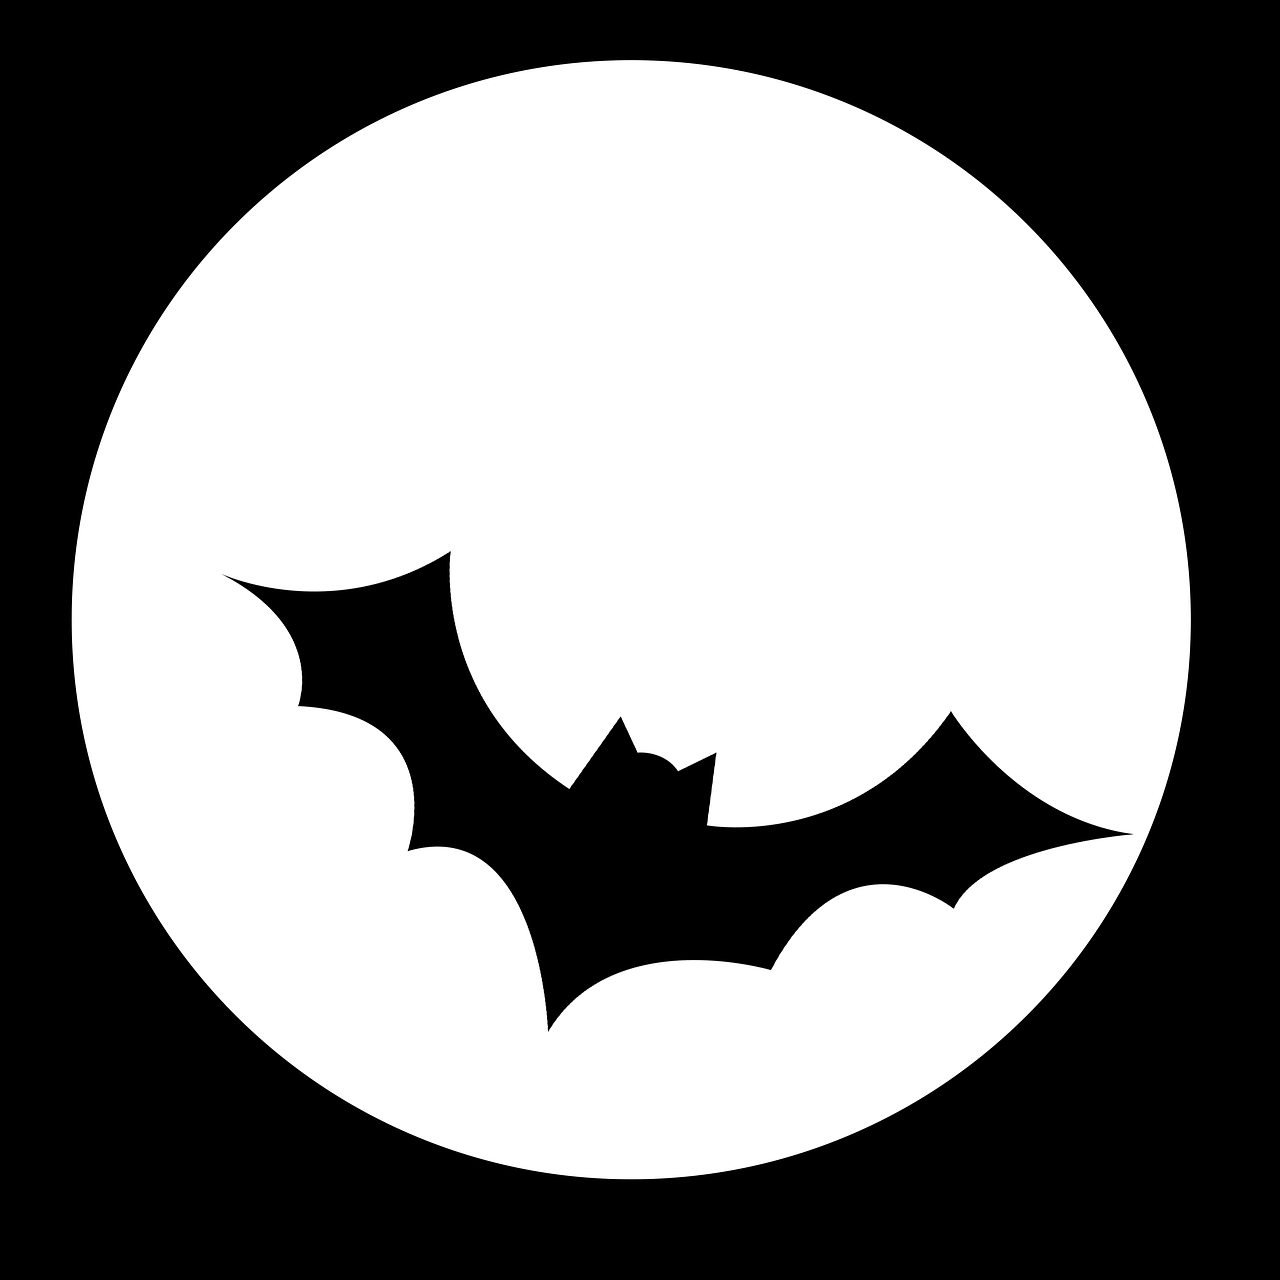 a black and white image of a bat, vector art, pixabay, sōsaku hanga, circular white full moon, beistle halloween decor, hd screenshot, simple logo